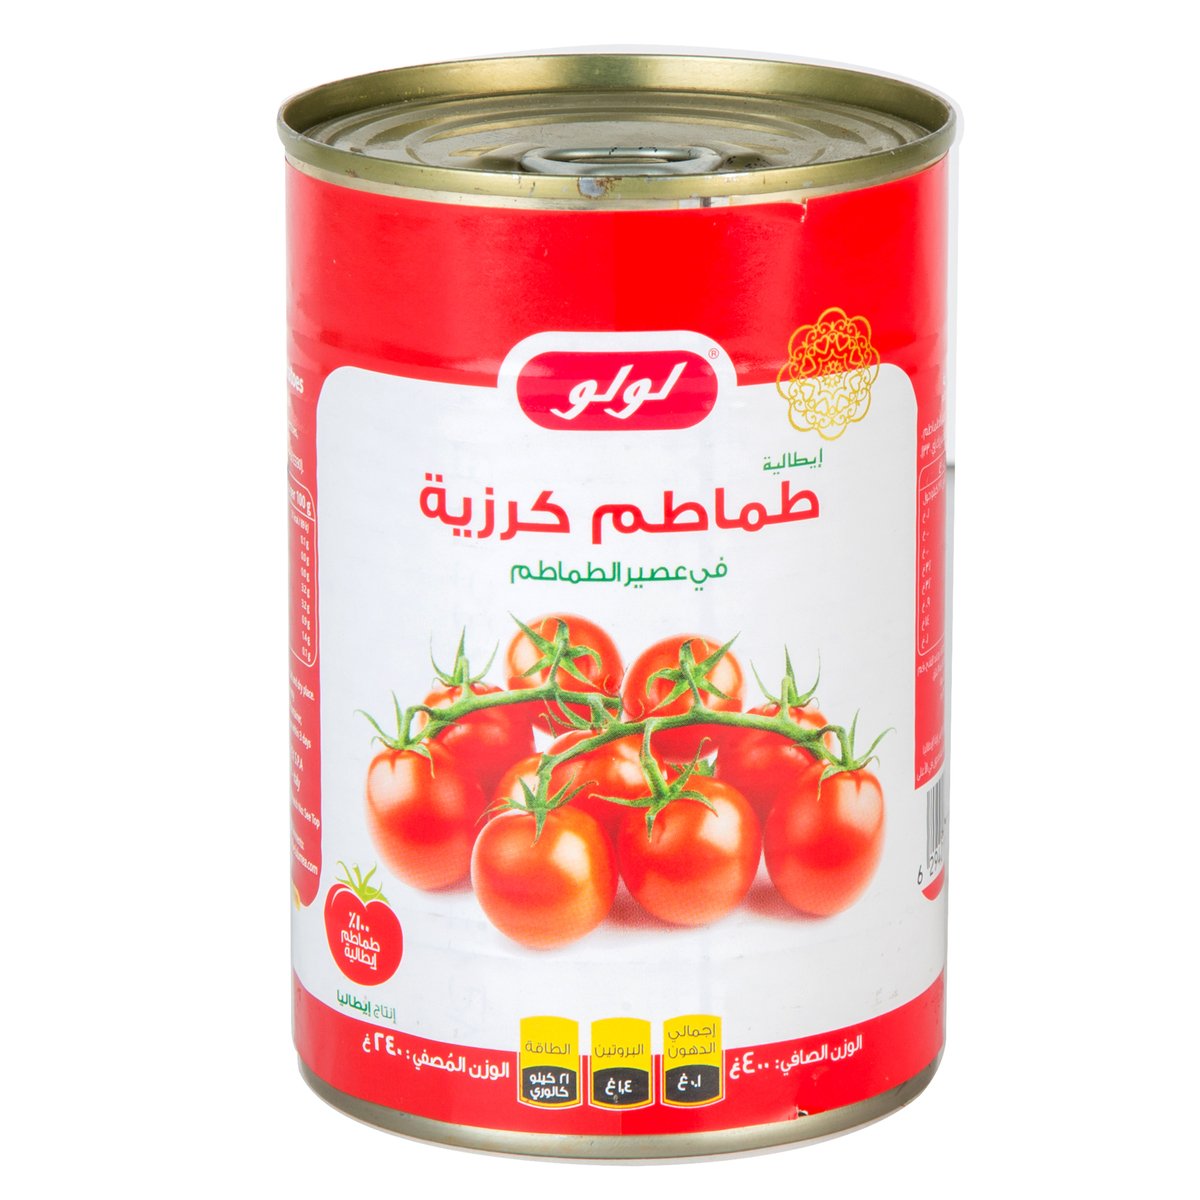 LuLu Cherry Tomatoes In Tomato Juice 400g